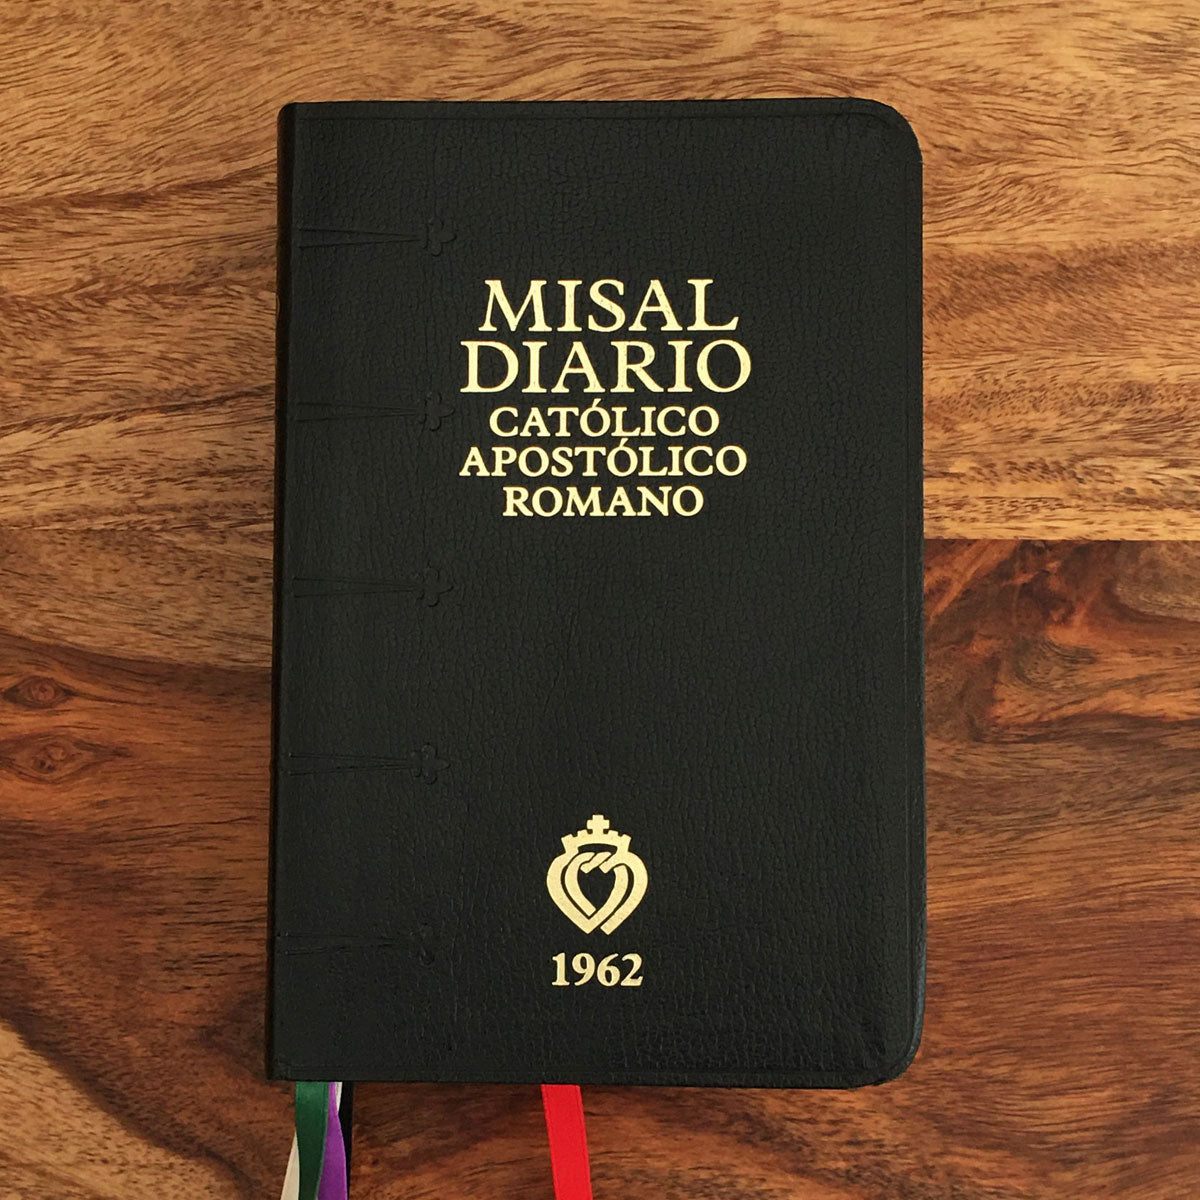 Misal en Latín-Español para la Misa tradicional